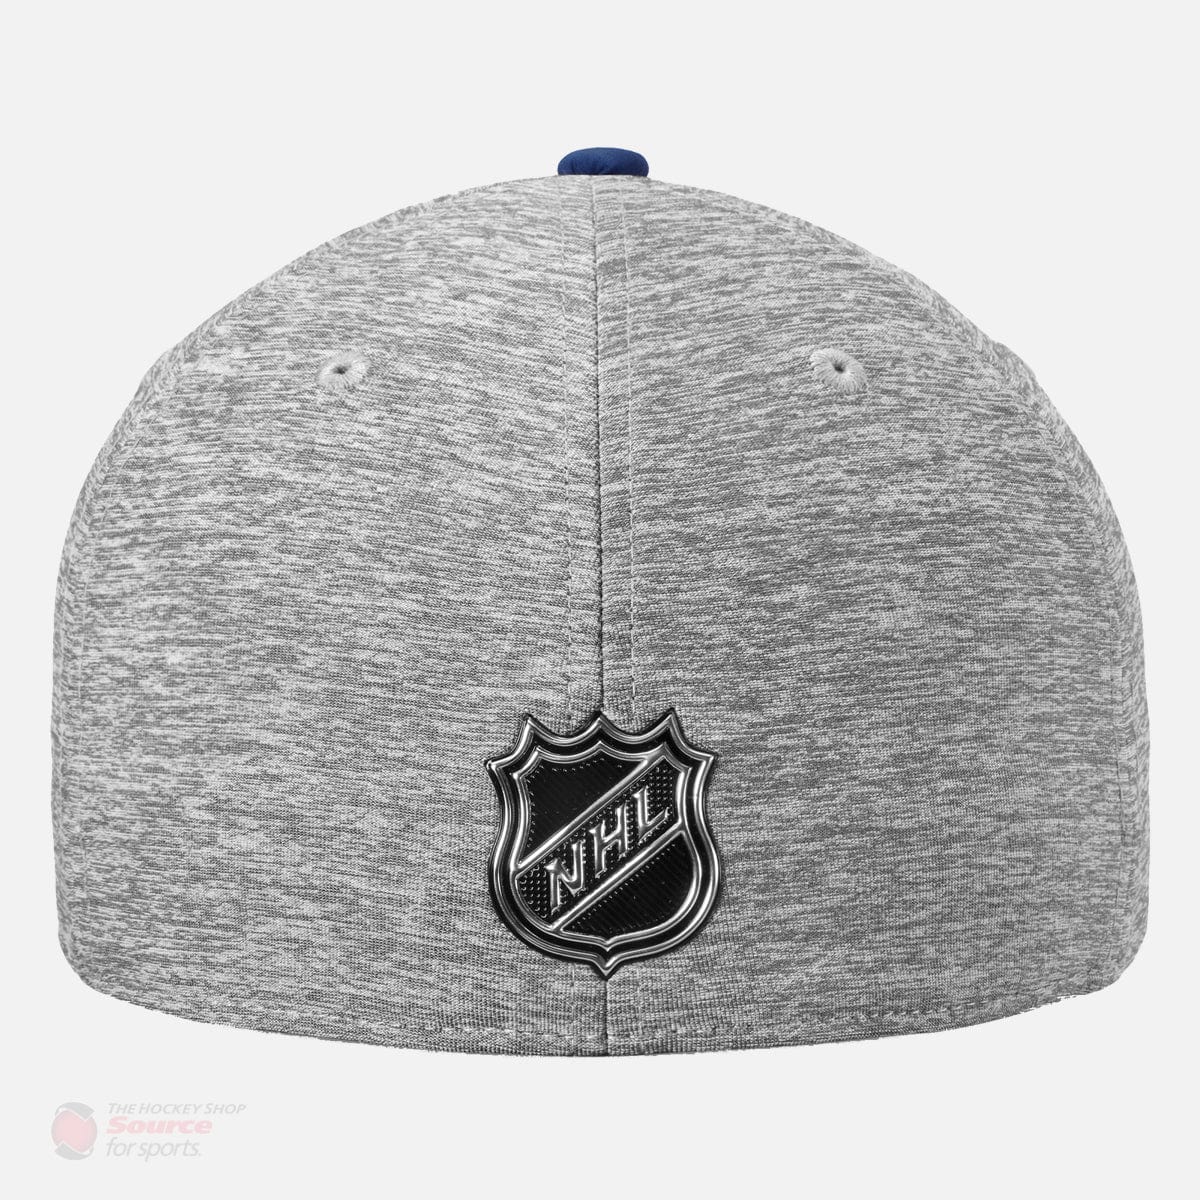 Fanatics NHL 2019 Playoffs Flexfit Hat